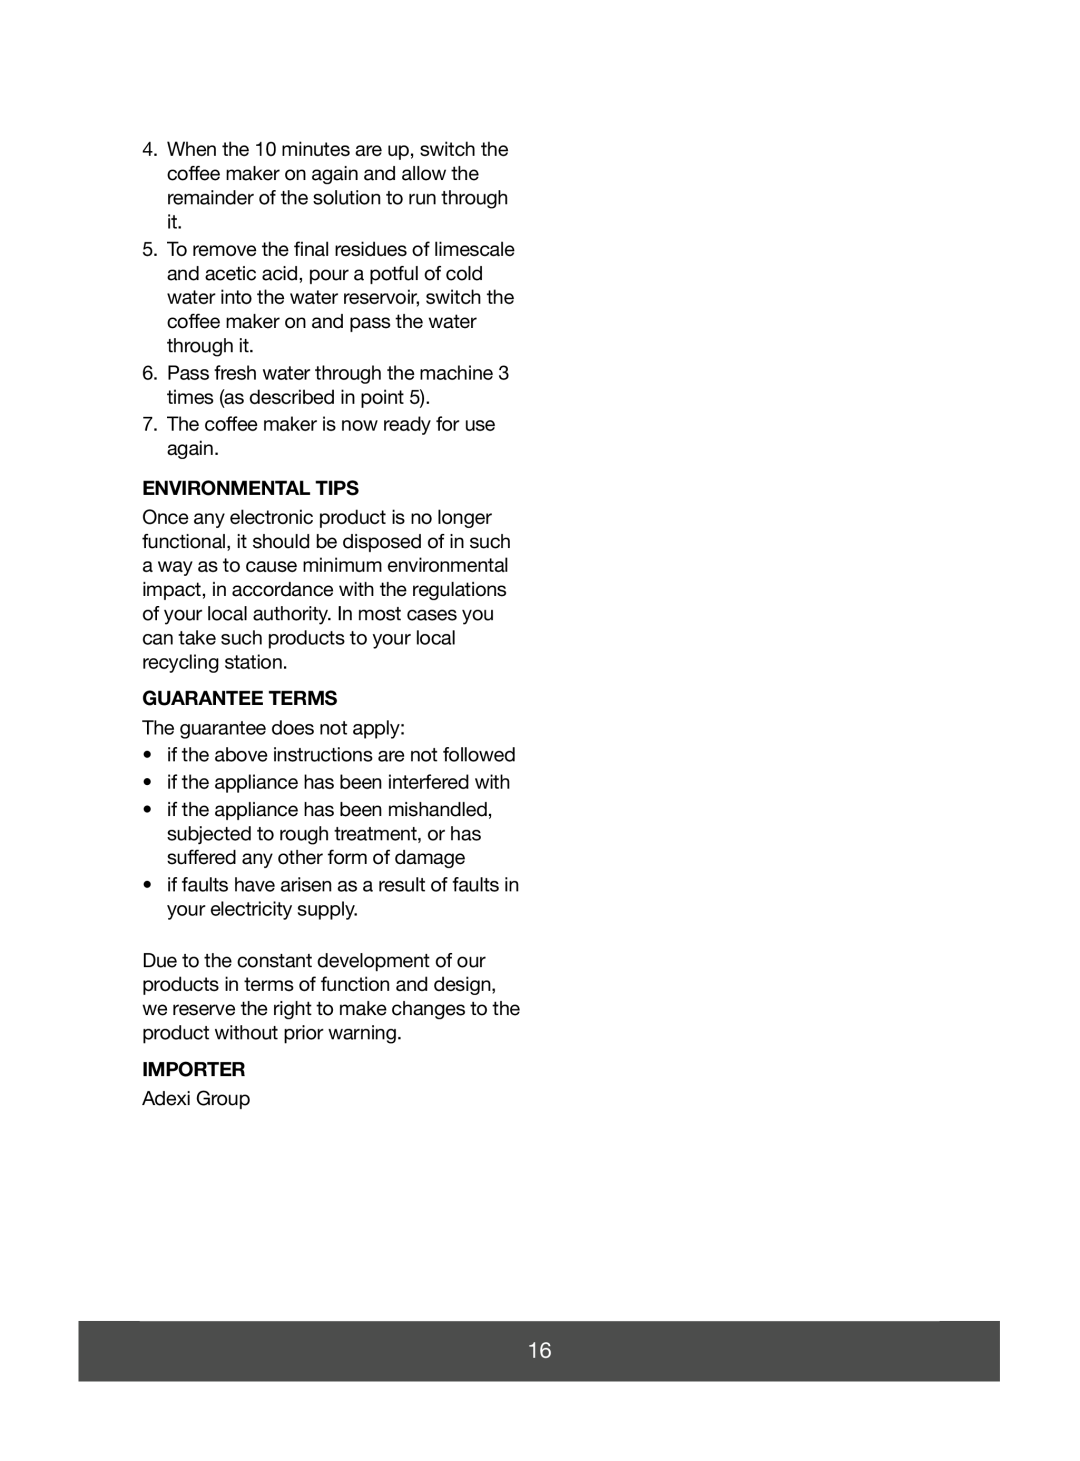 Melissa 645-085 manual Environmental Tips, Guarantee Terms, Importer 